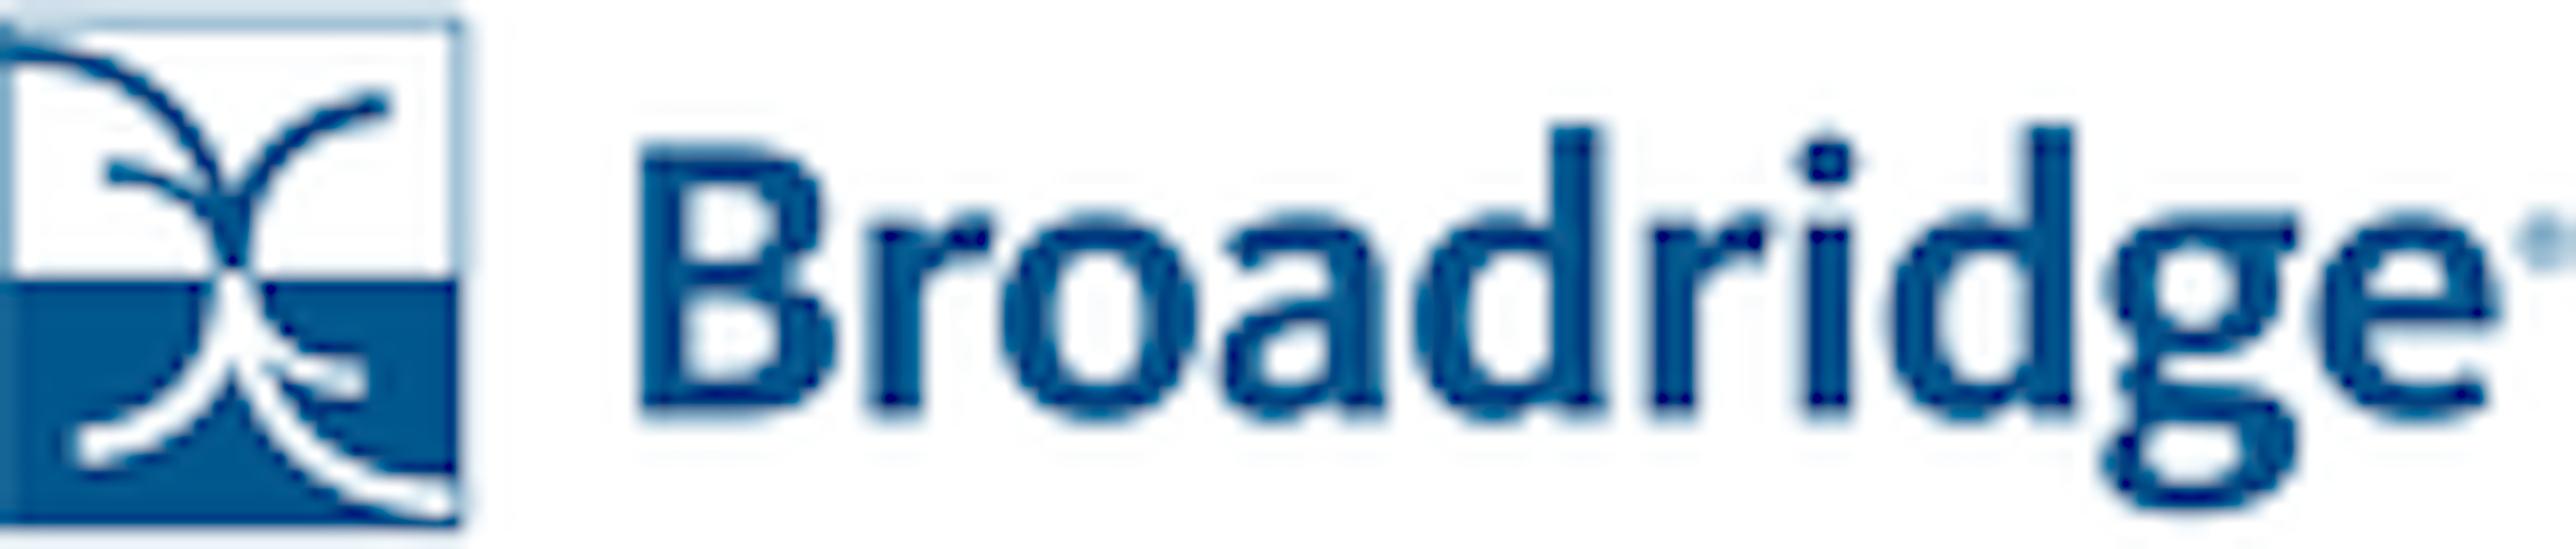 Broadridge Investment Accounting Logo